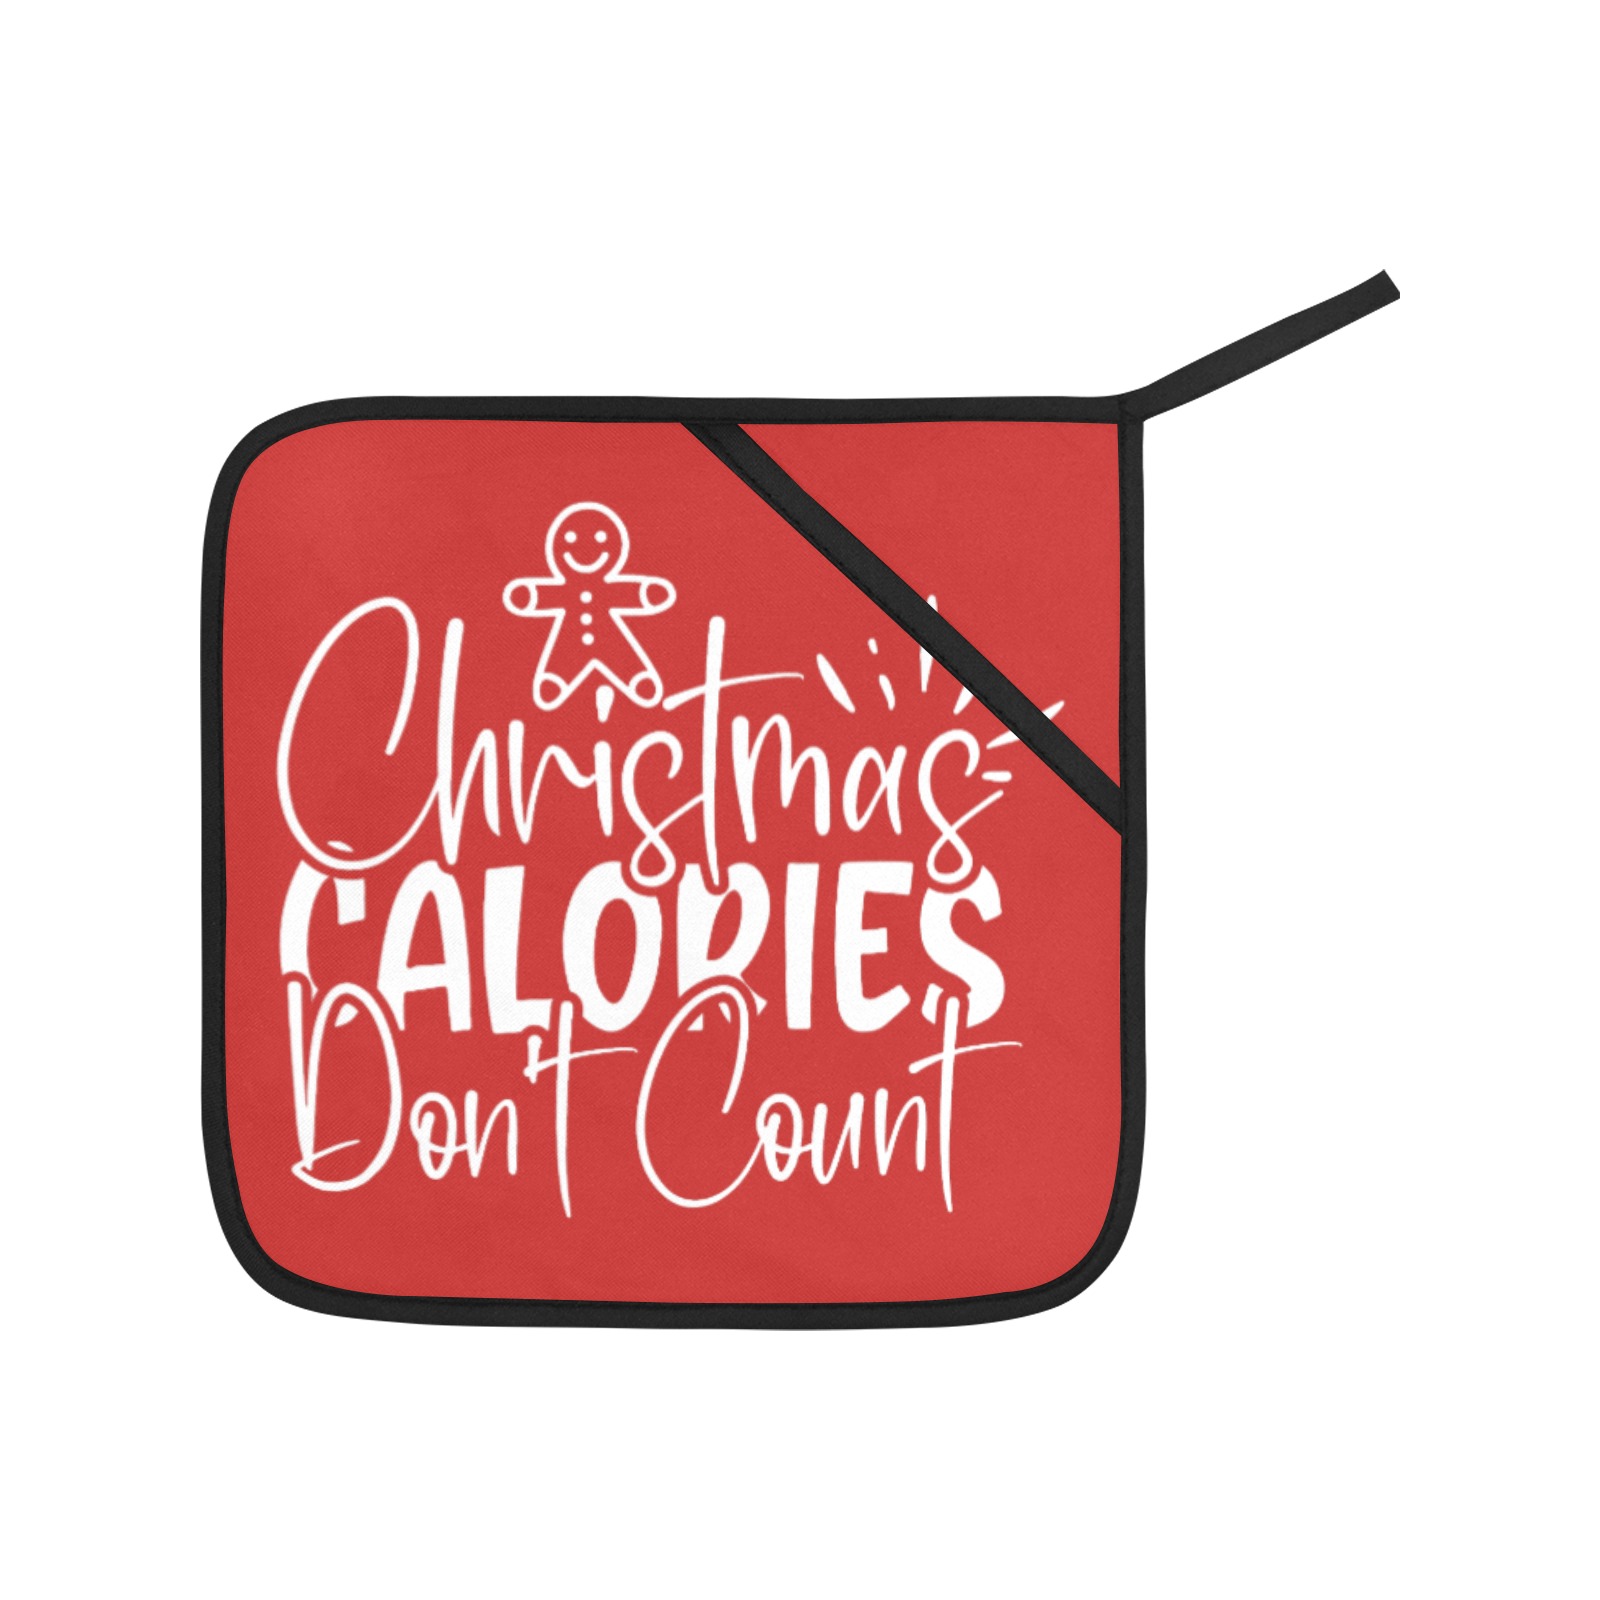 Christmas Calories Don't Count Oven Mitt & Pot Holder